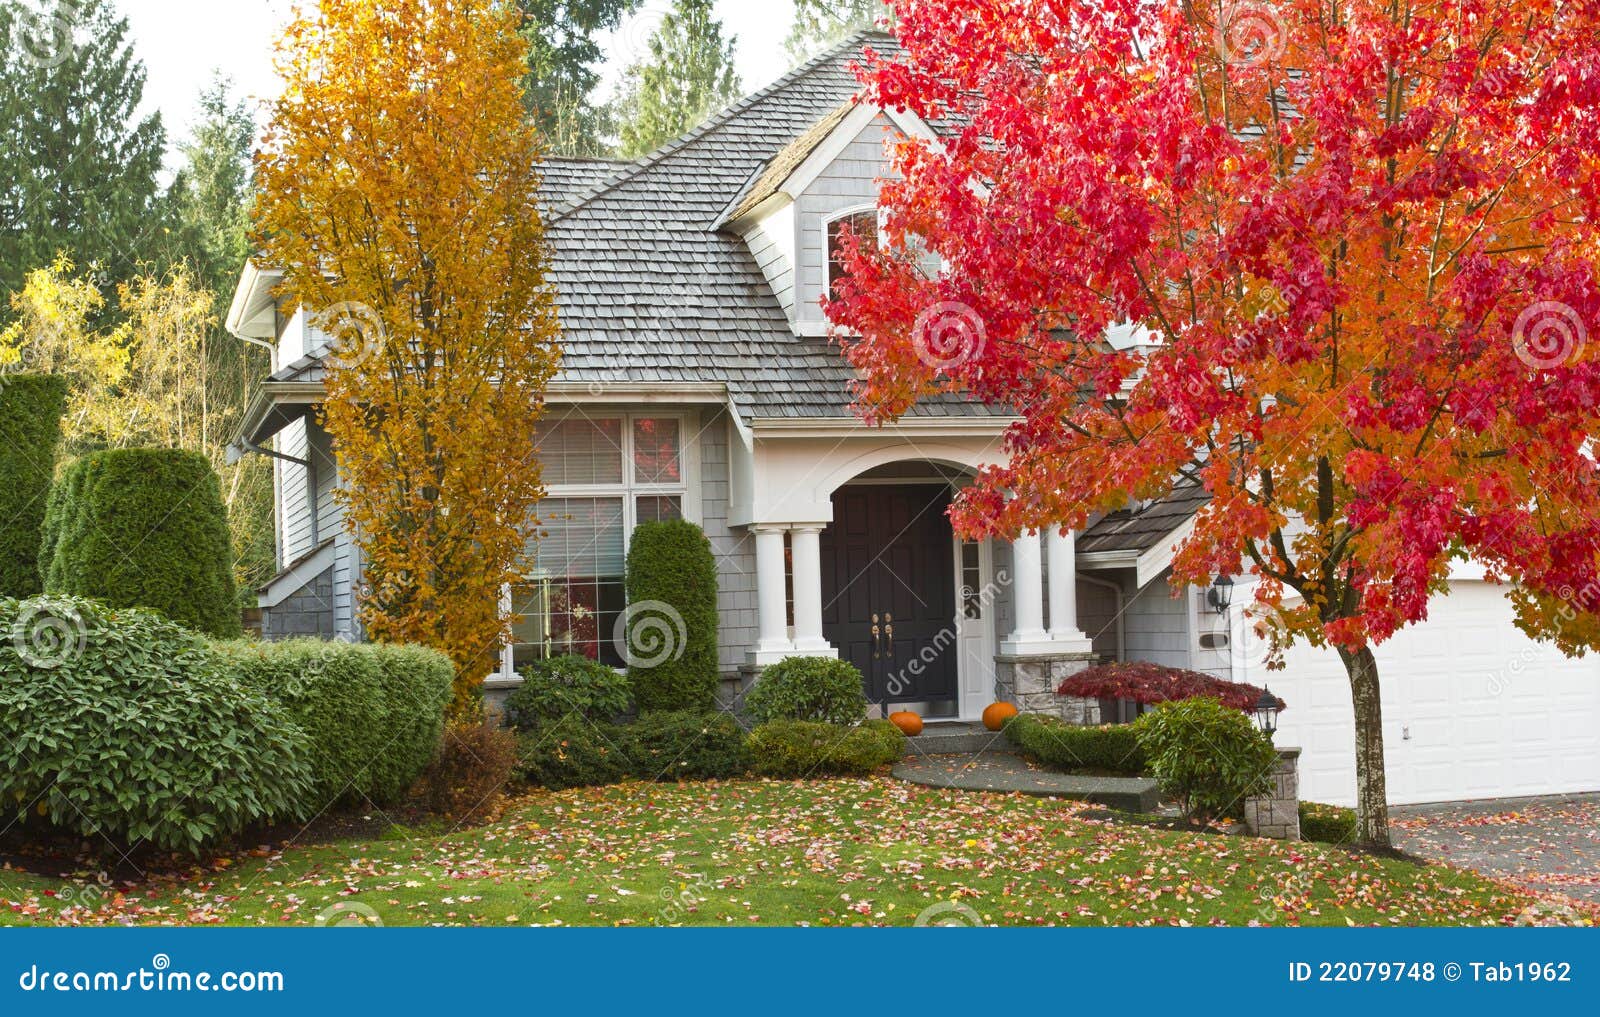 residential home during fall season